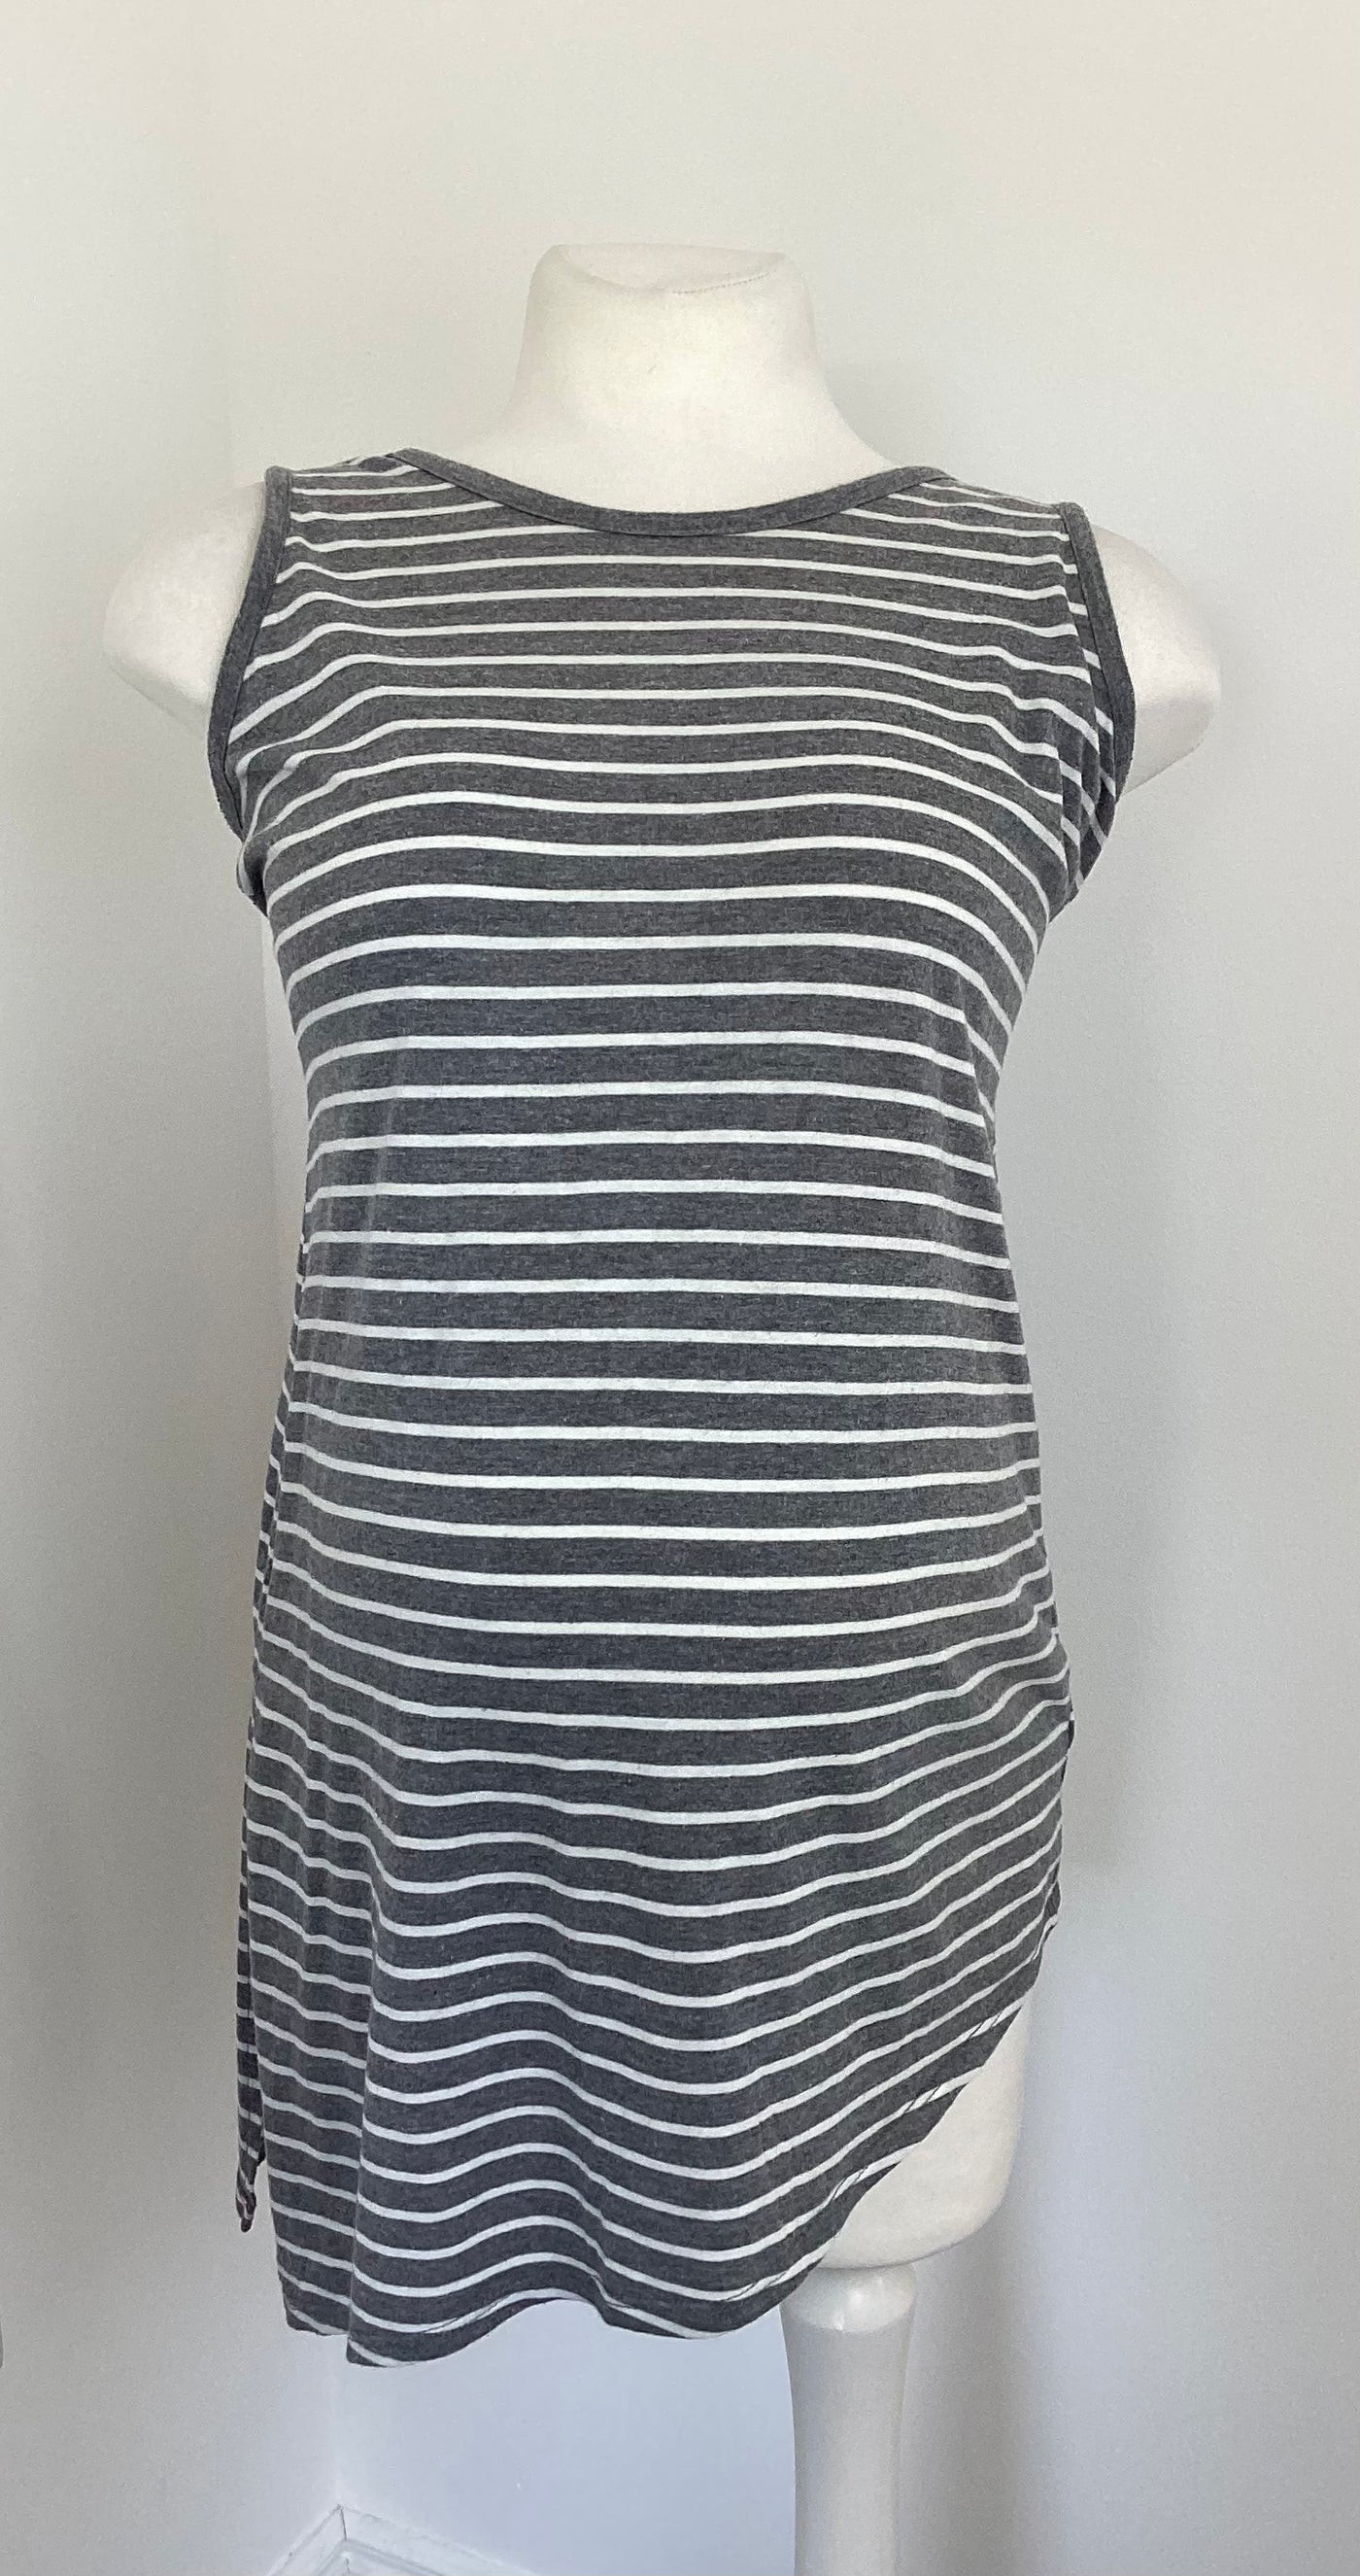 Motherhood Maternity grey & white striped sleeveless long length top with side split - Size M (Approx UK 10/12)